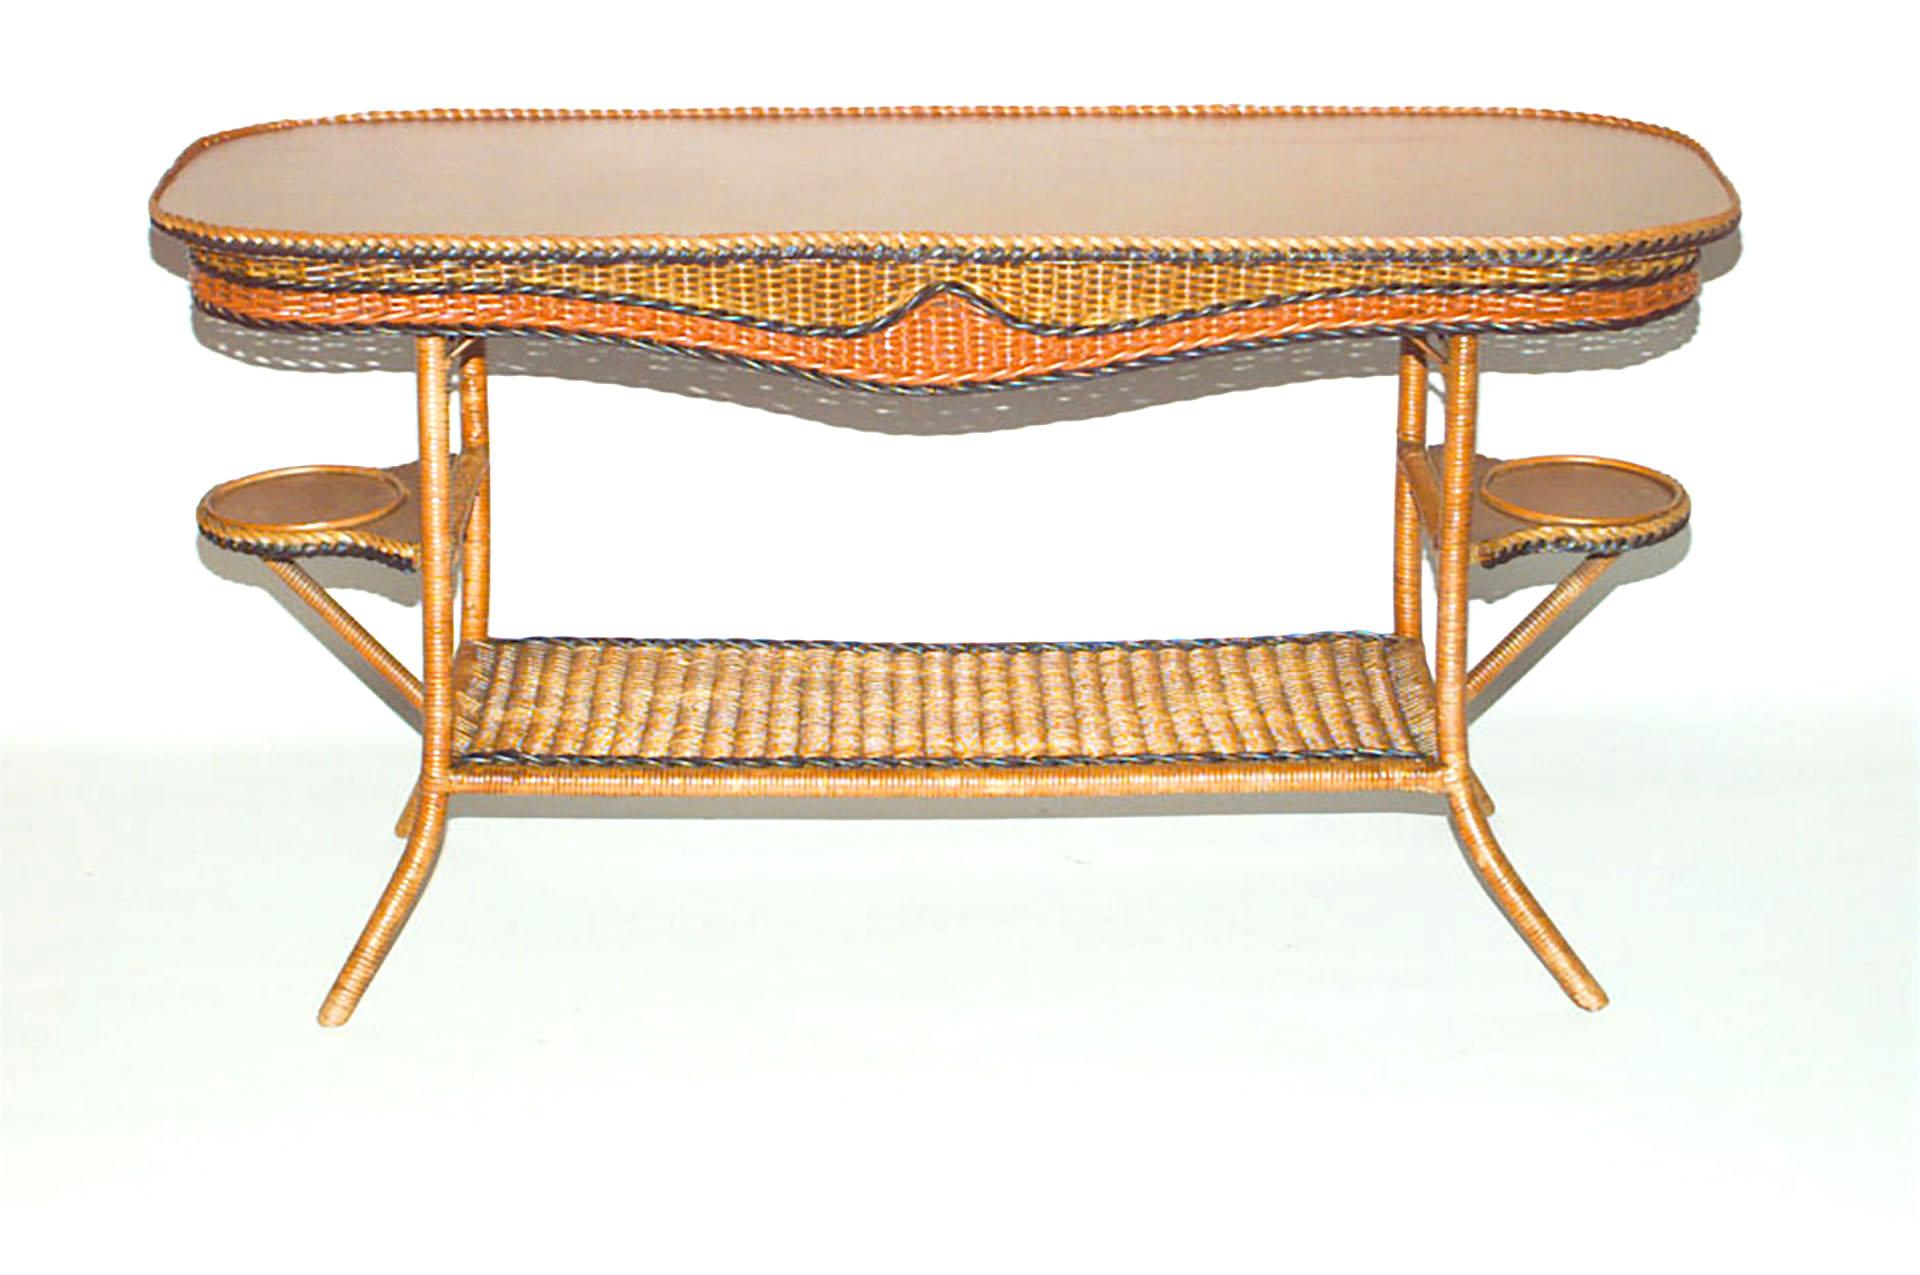 American Art Deco natural wicker rectangular davenport table with black & orange trim with 2 side shelves and 1 bottom shelf.